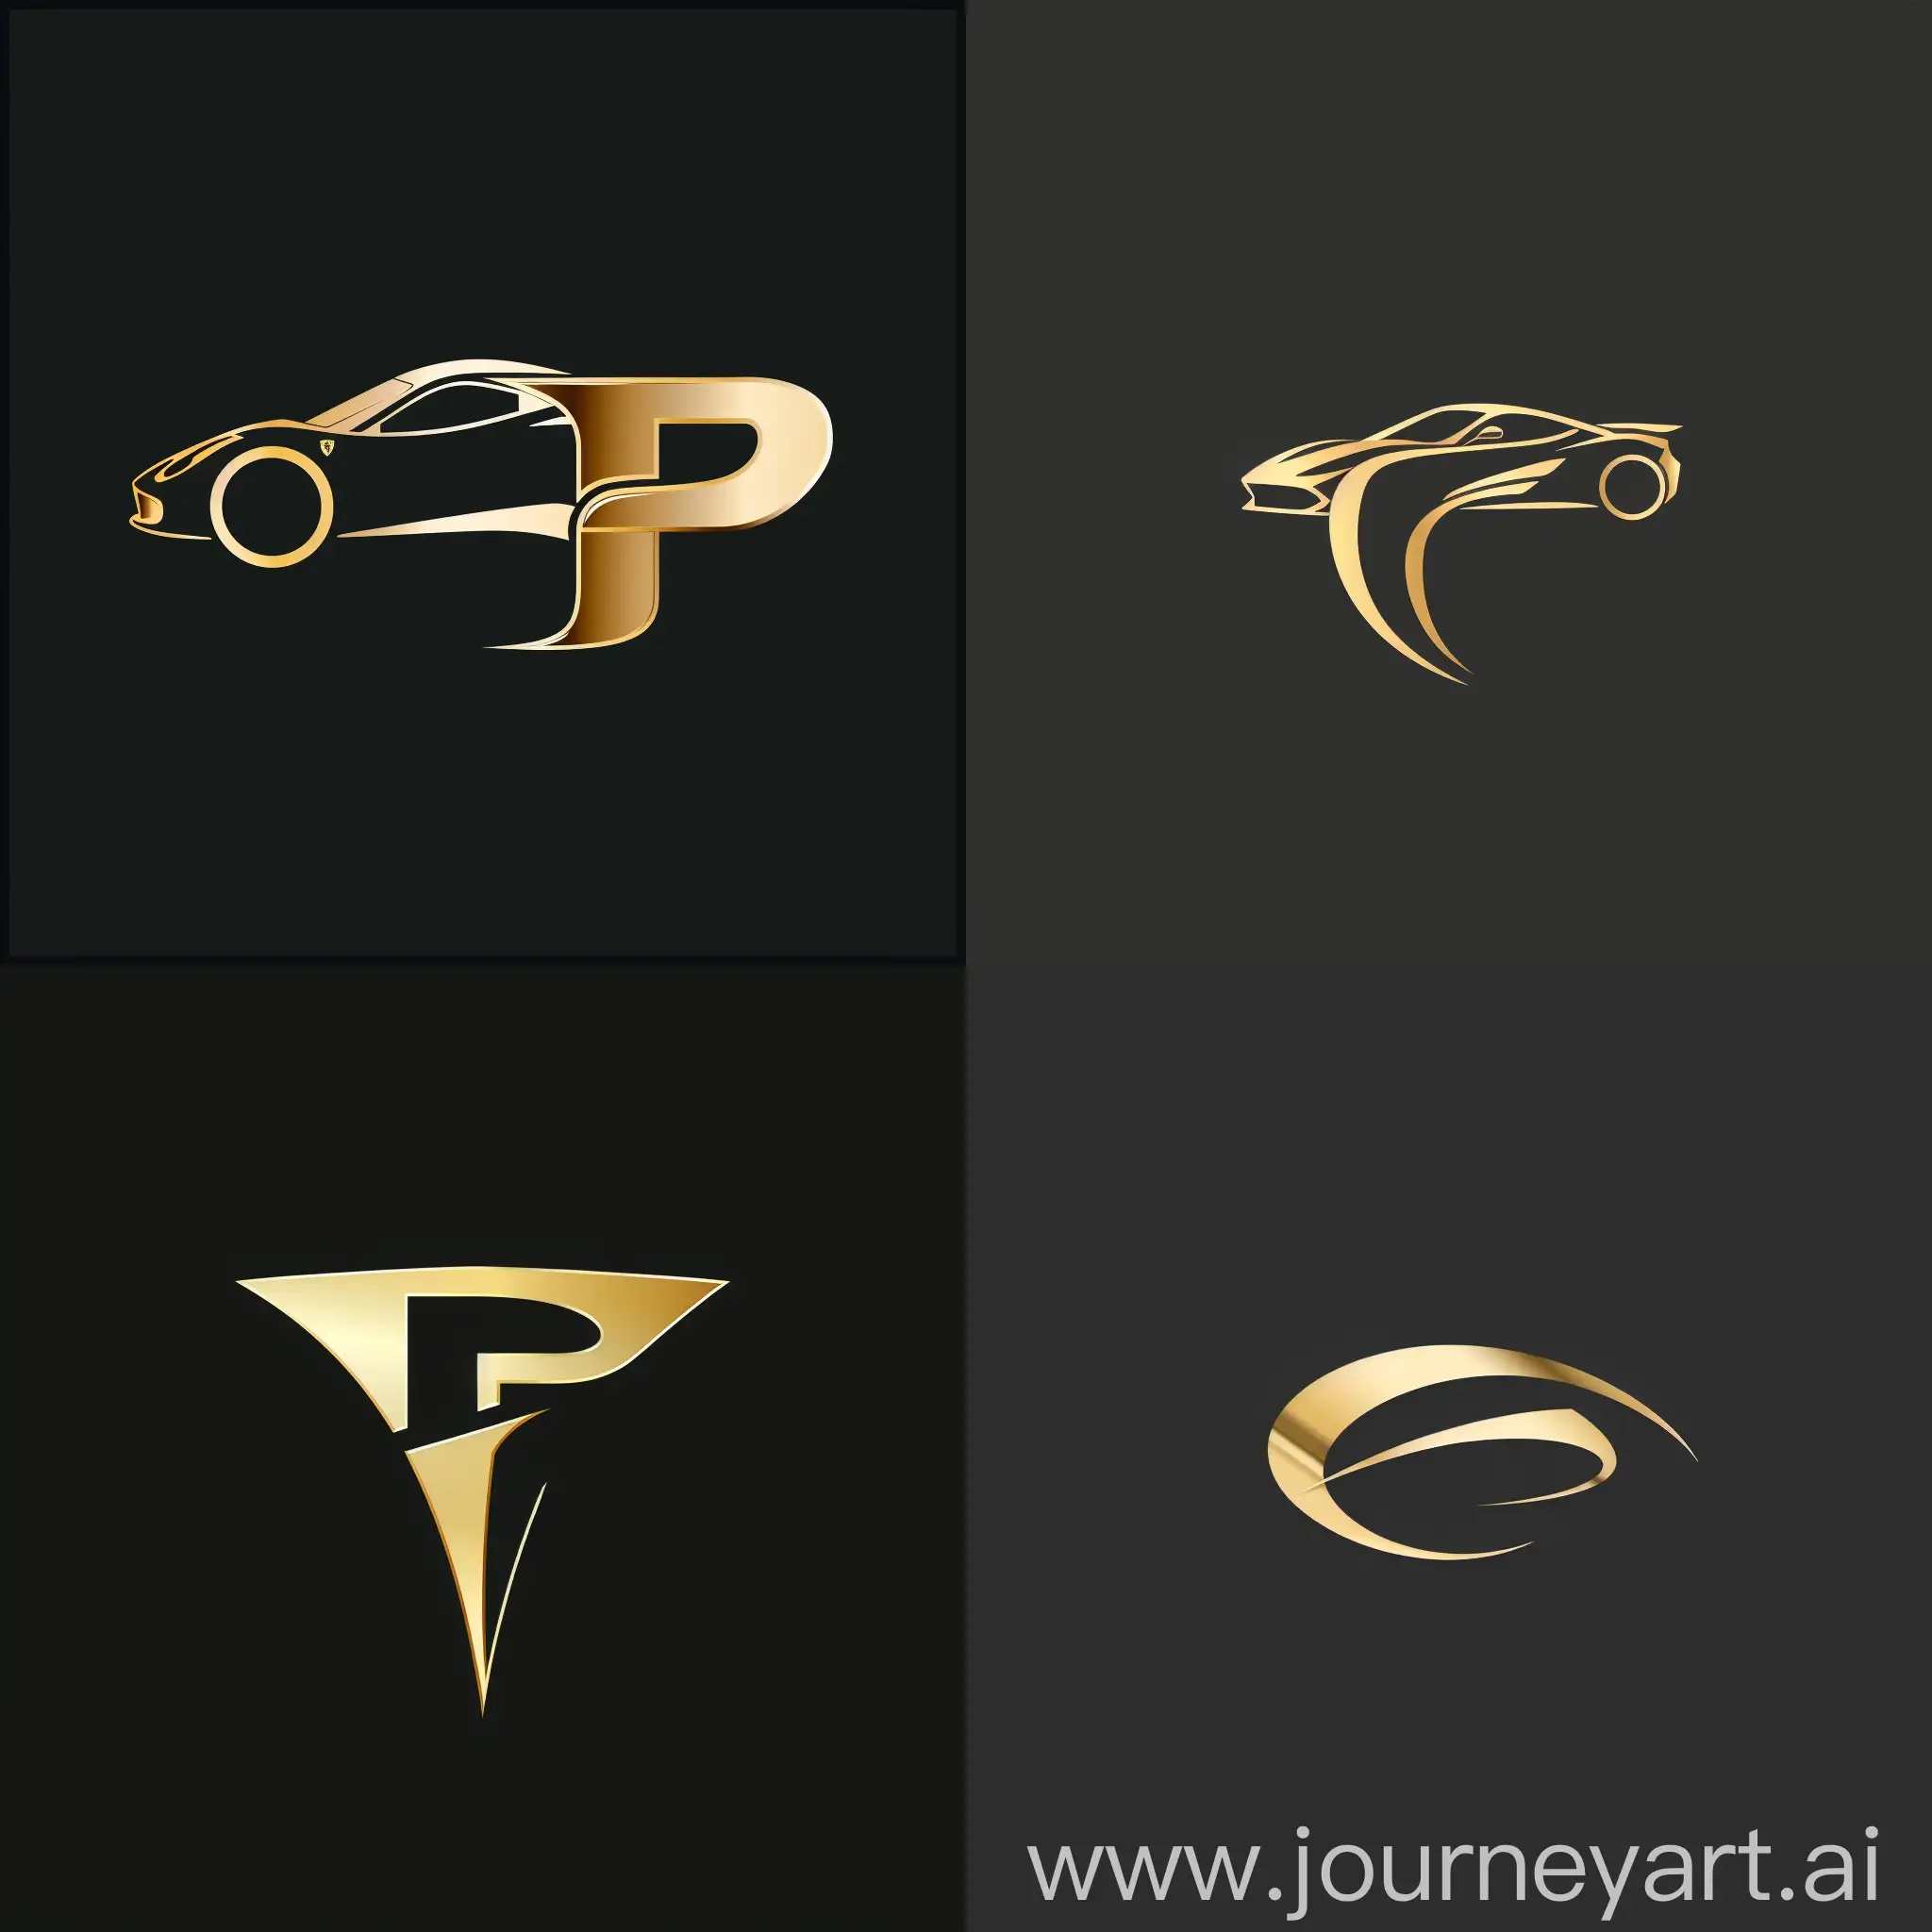 Fantasy-Car-Dealership-Logo-Design-with-Gold-Accents